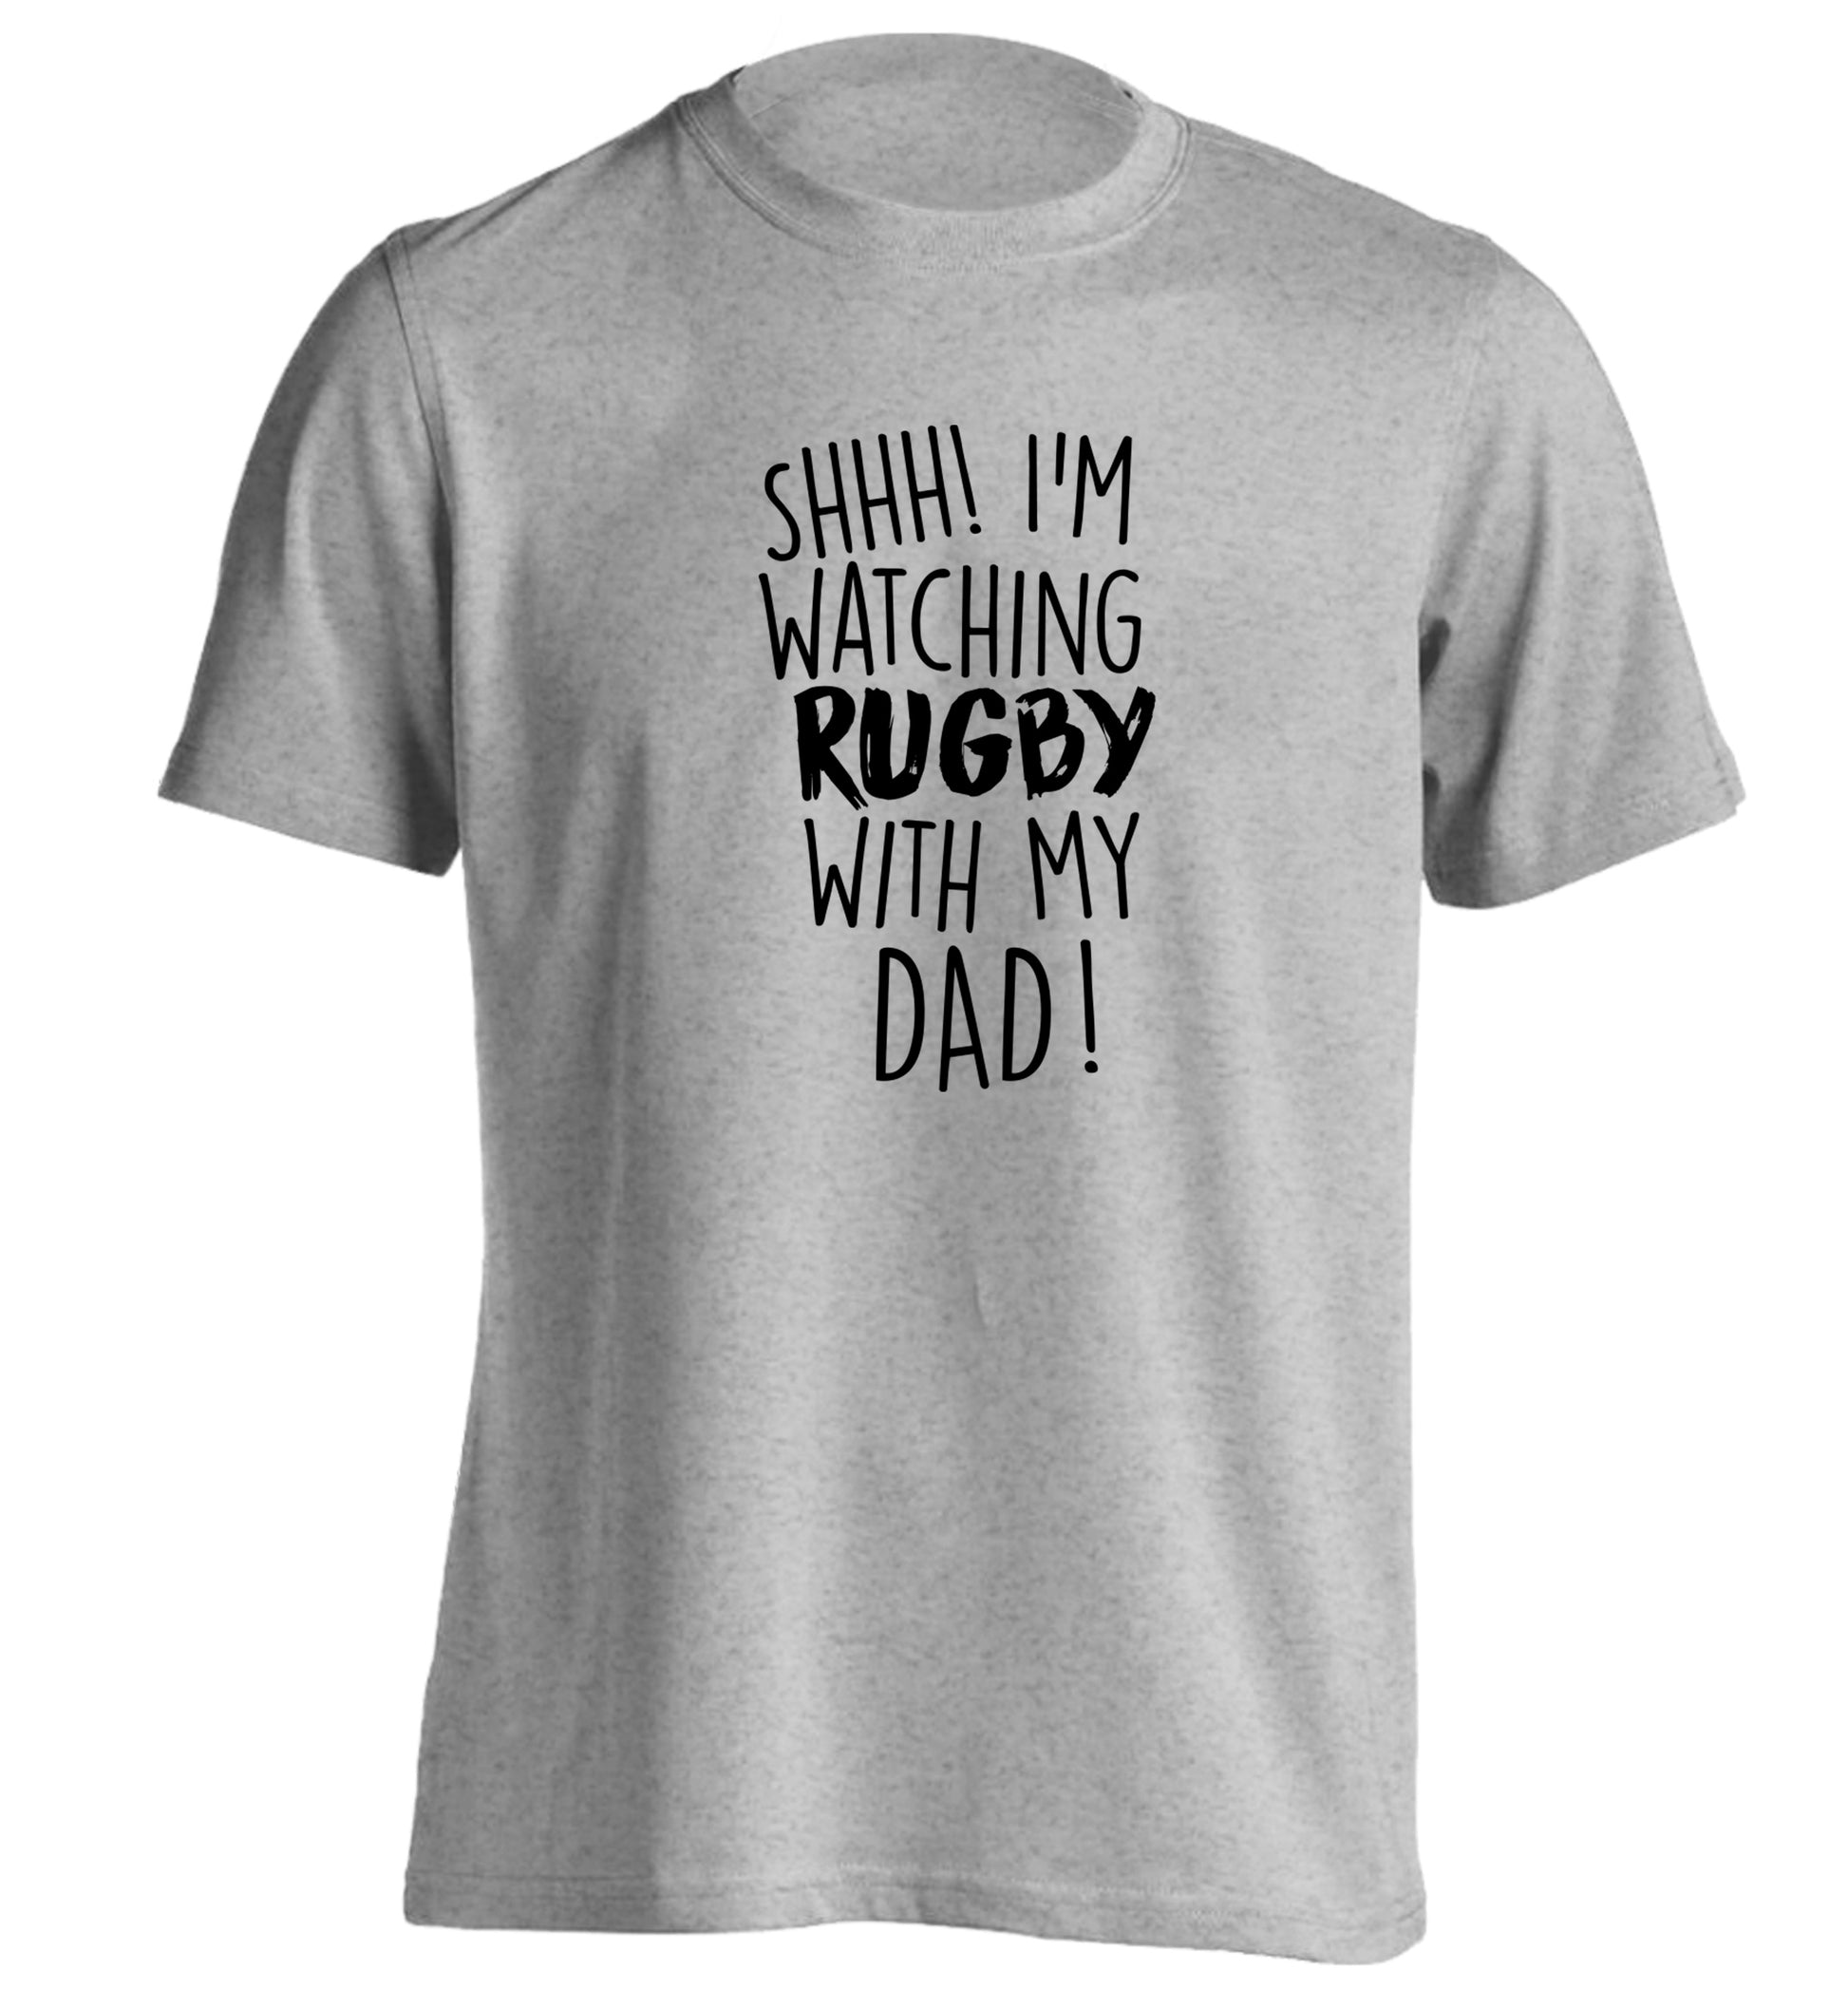 Shh... I'm watching rugby with my dad adults unisex grey Tshirt 2XL